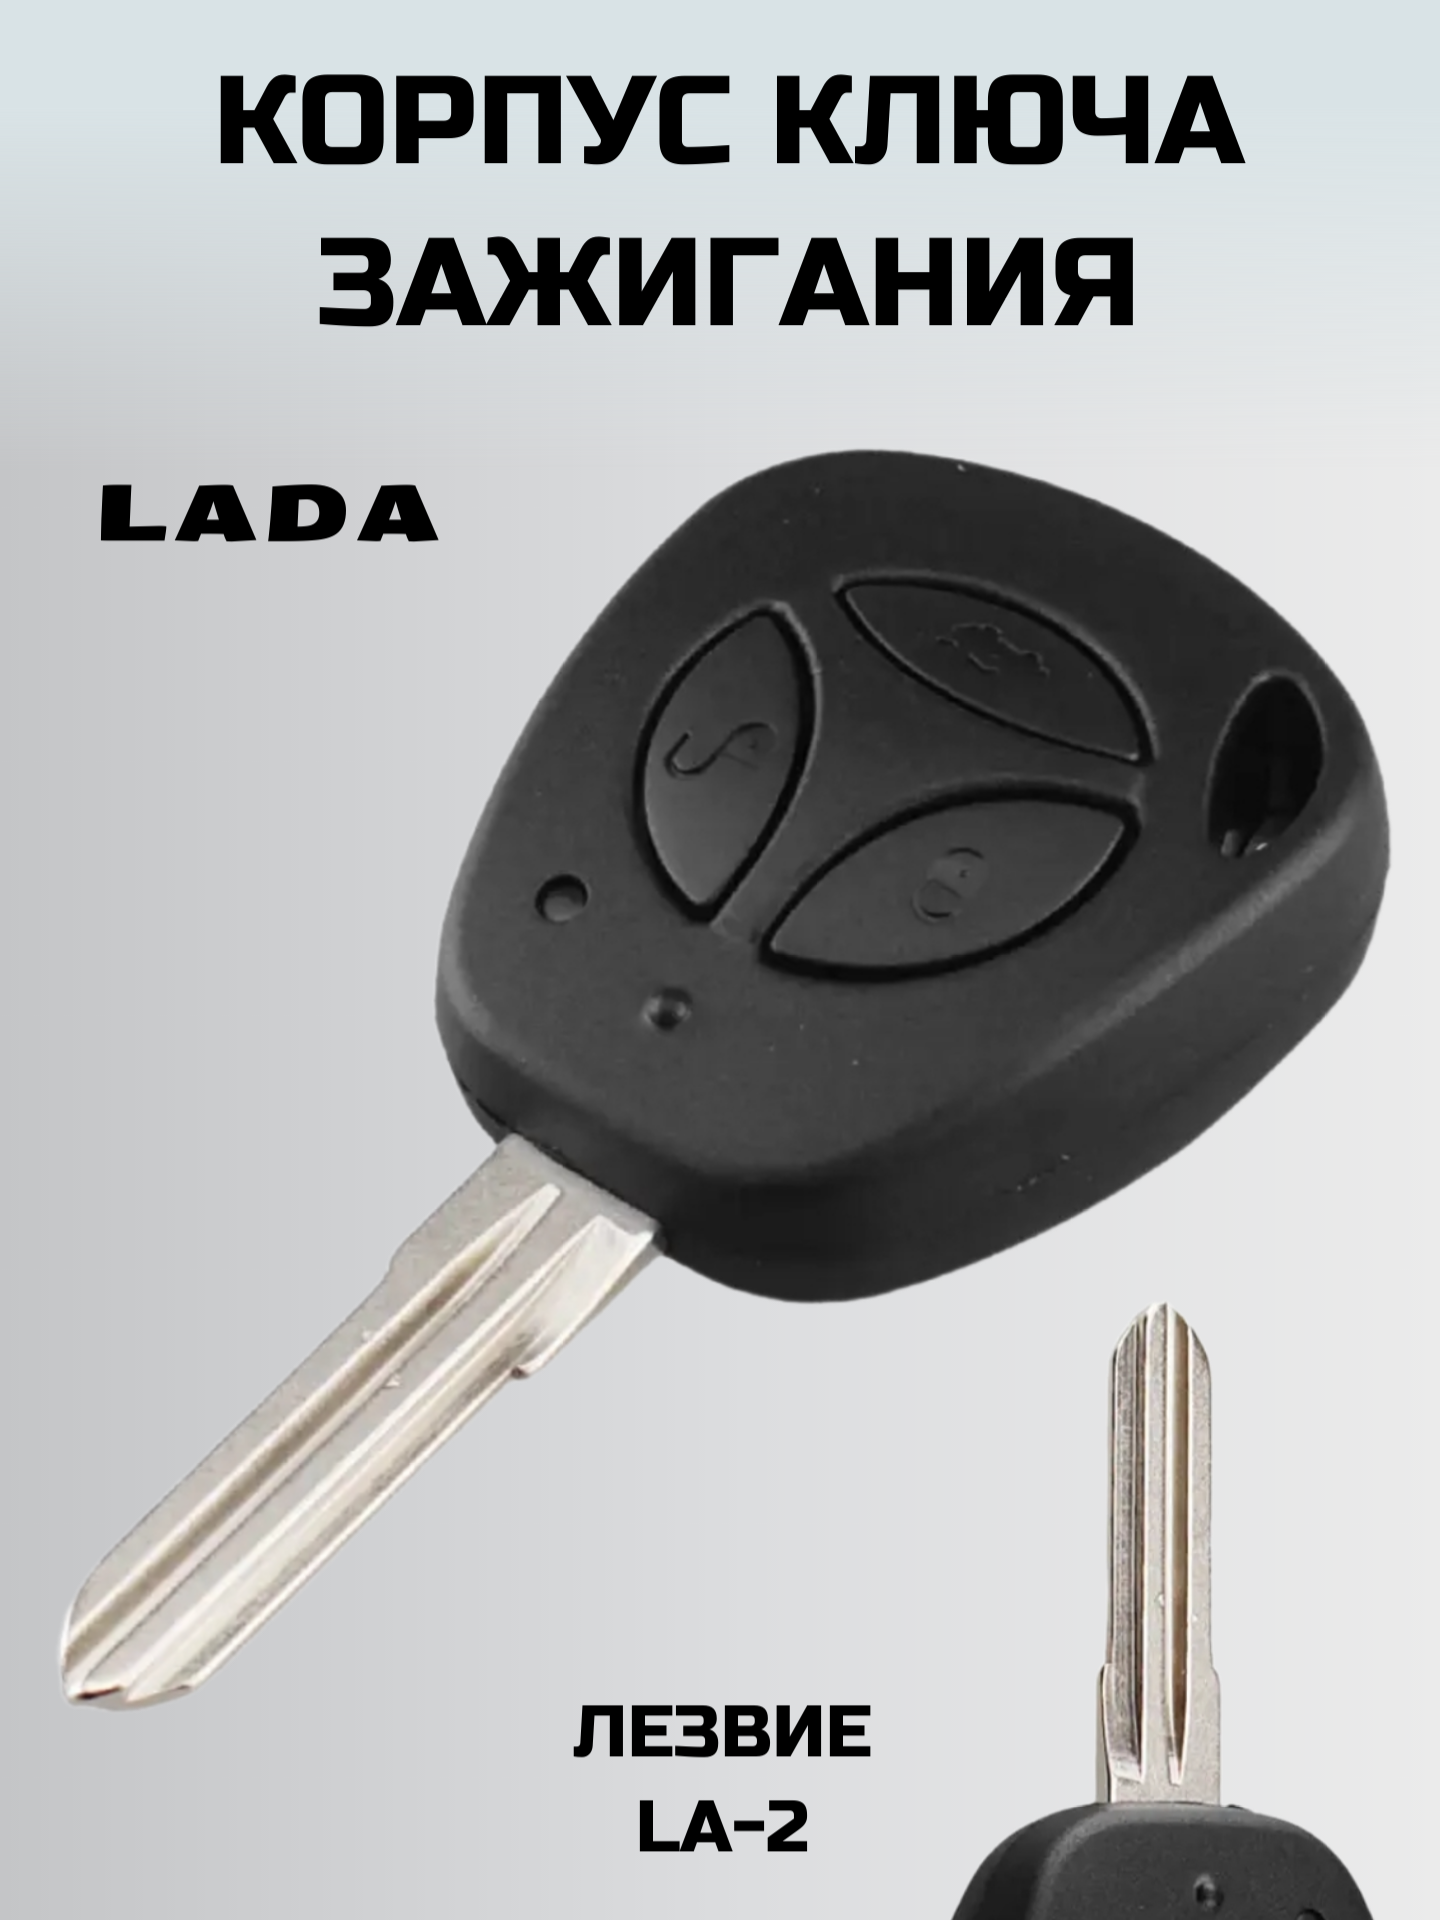 Ключ лада корпус ключа LADA ключ зажигания Лада